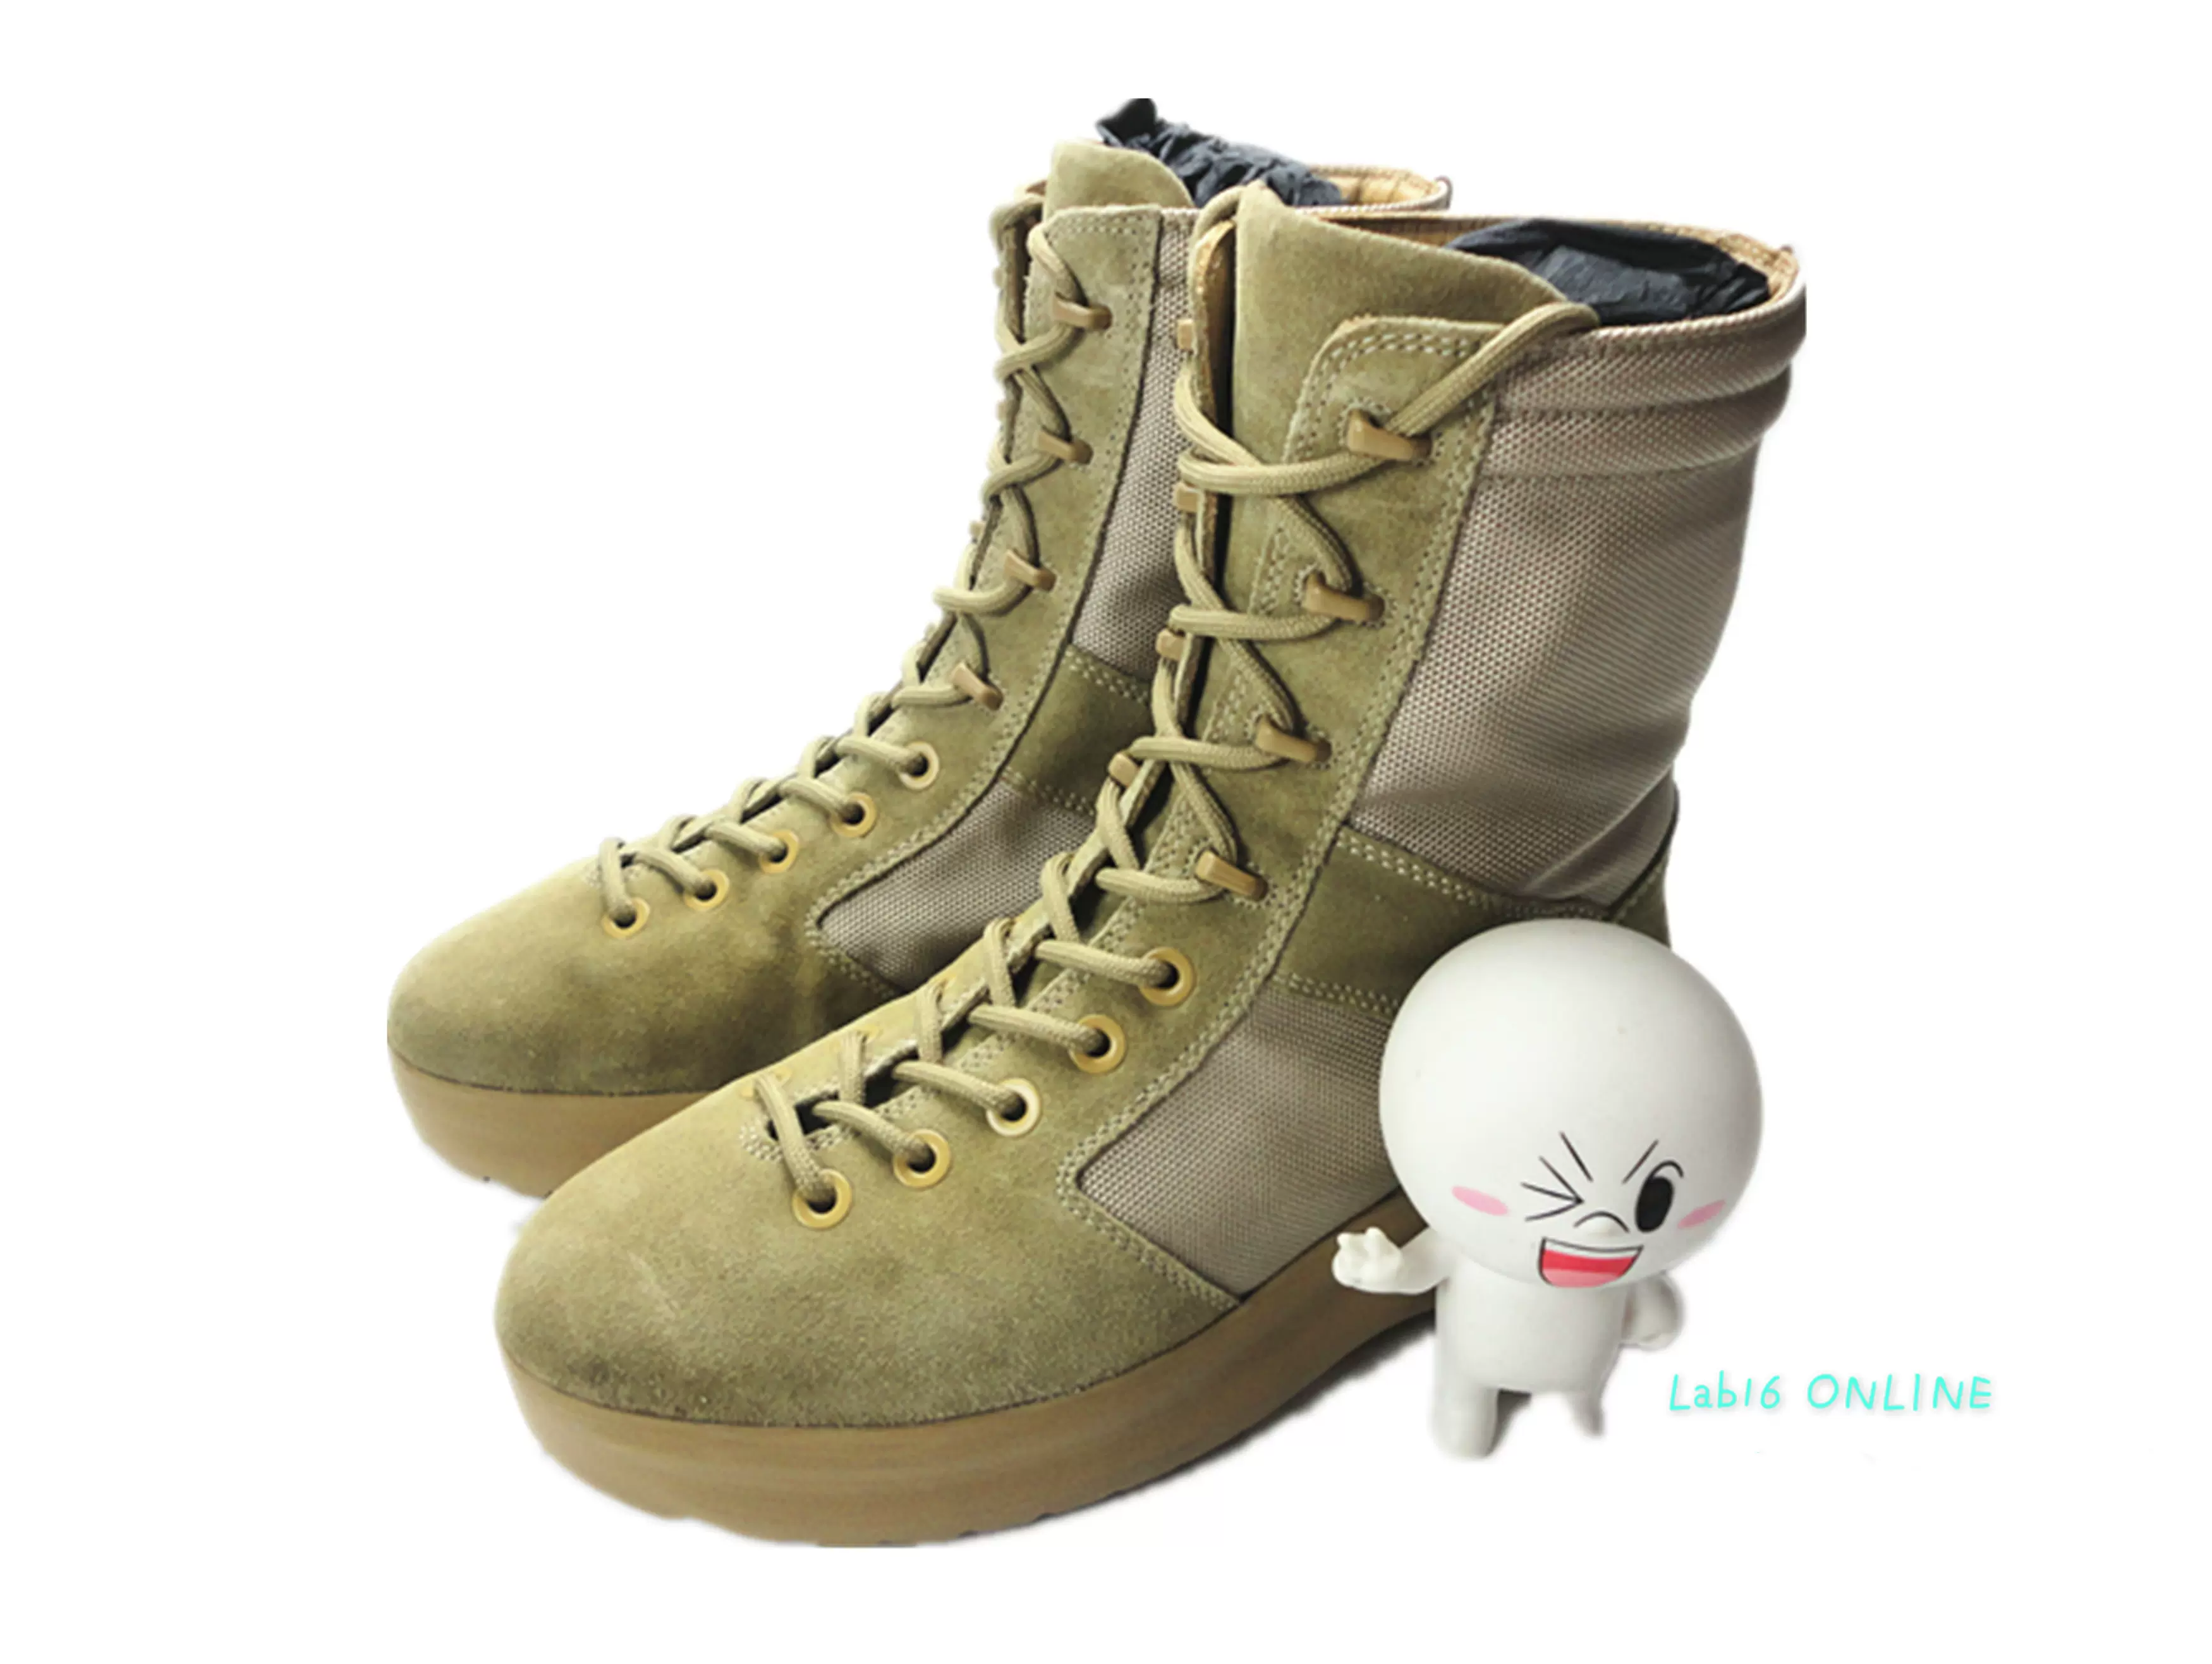 國內現貨】Kanye同款Yeezy Season 4 COMBAT boots高筒球鞋靴子-Taobao